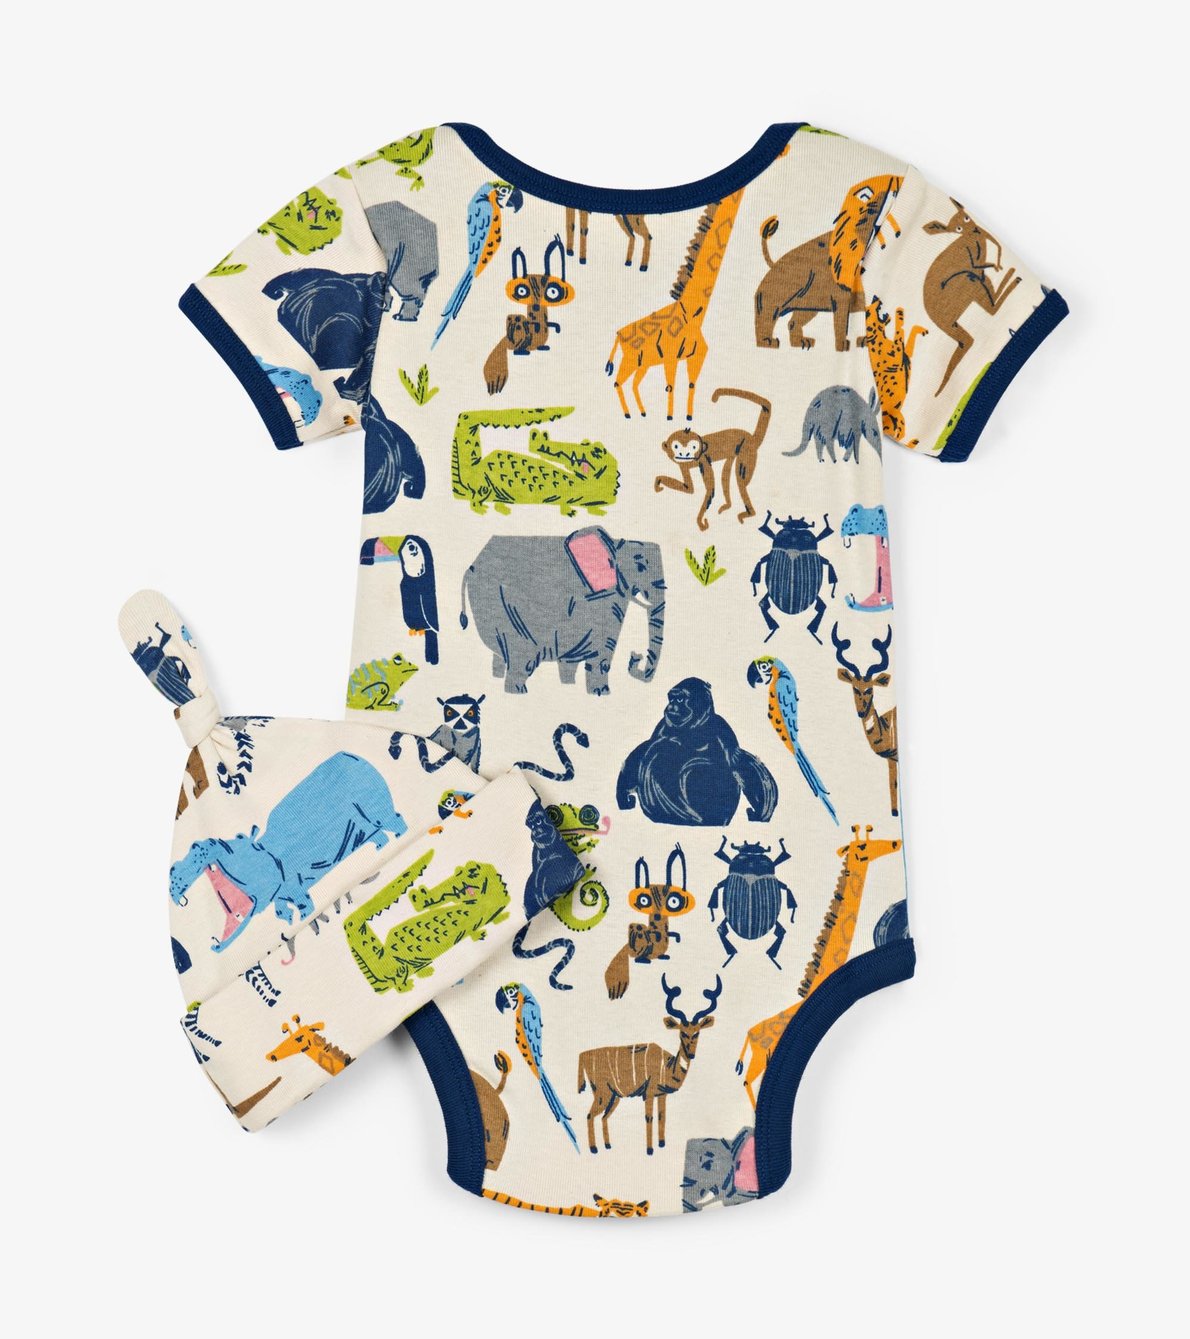 View larger image of Animal Safari Baby Bodysuit with Hat